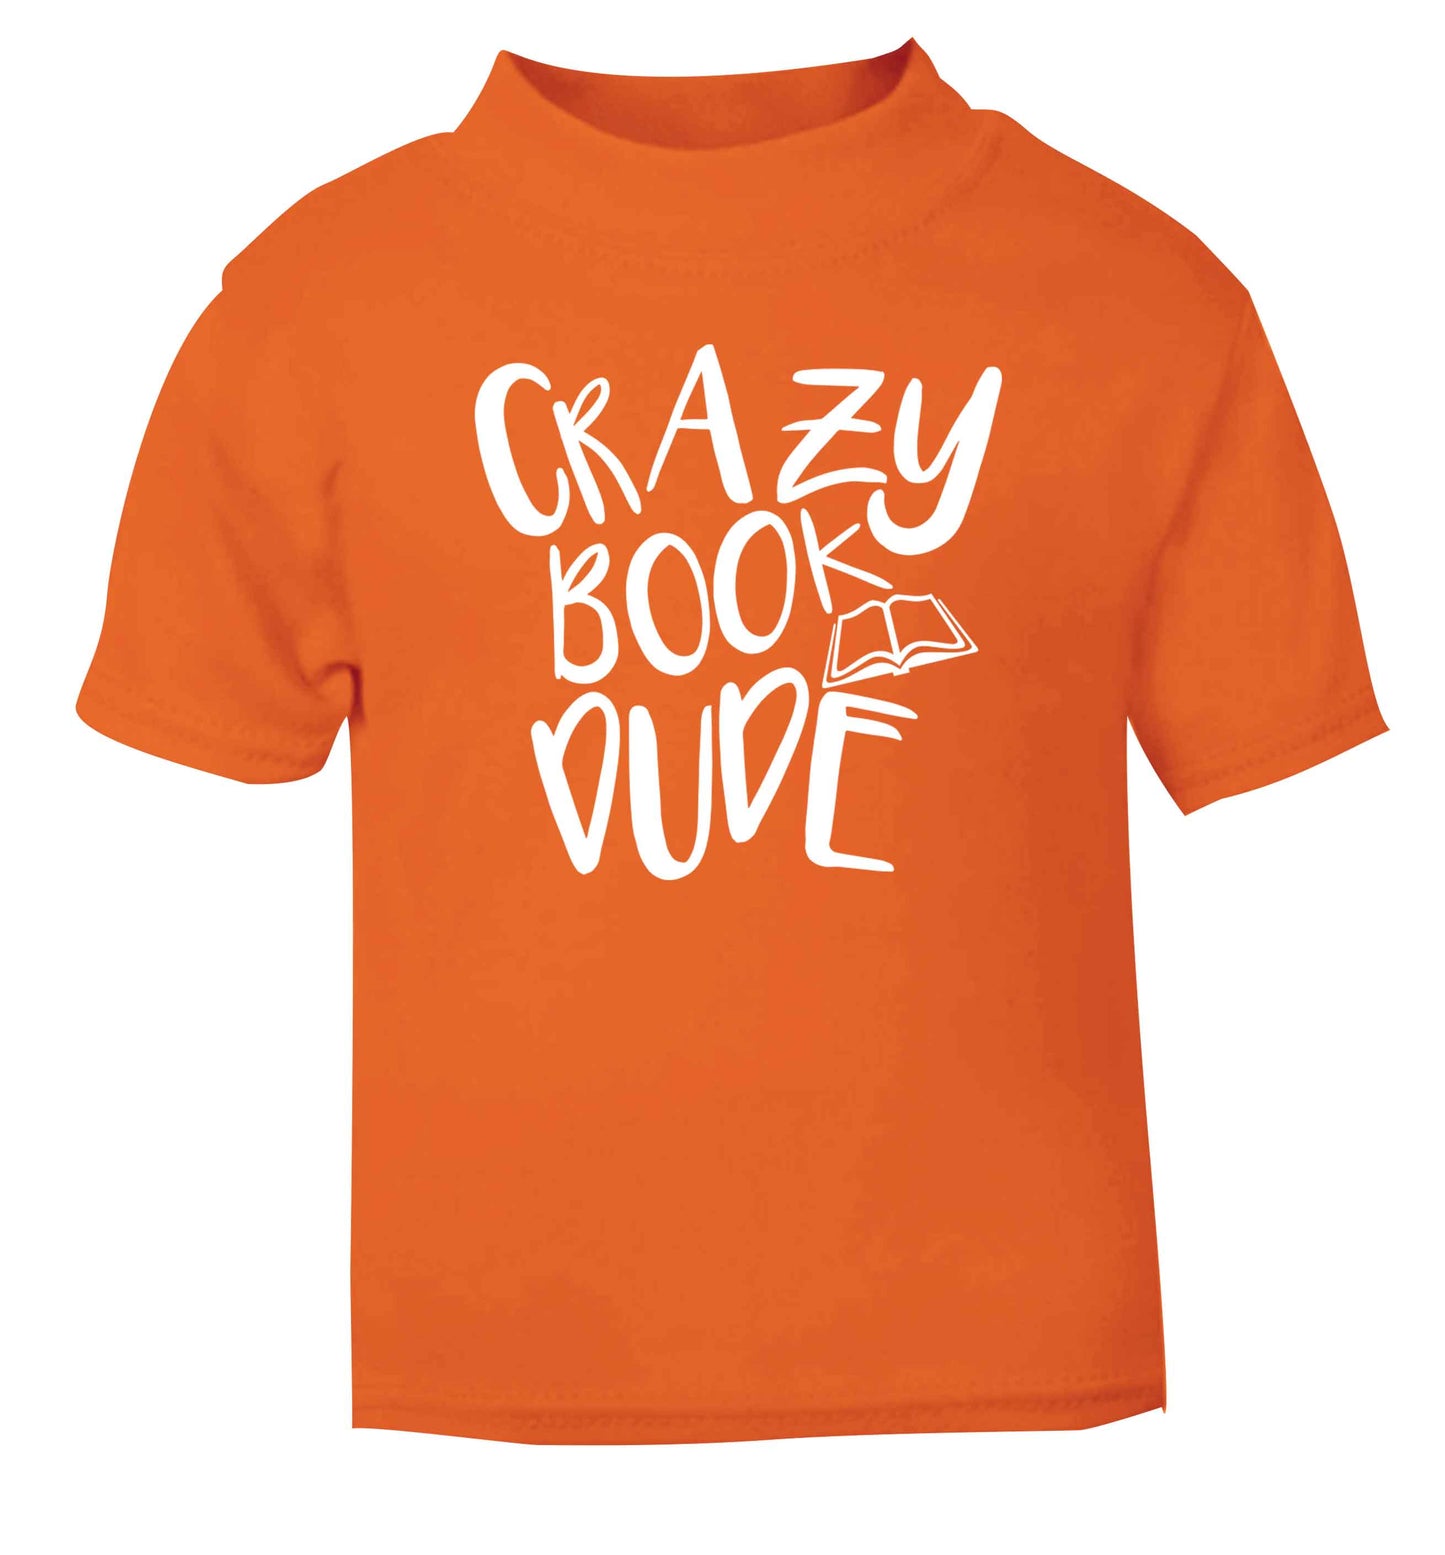 Crazy book dude orange Baby Toddler Tshirt 2 Years